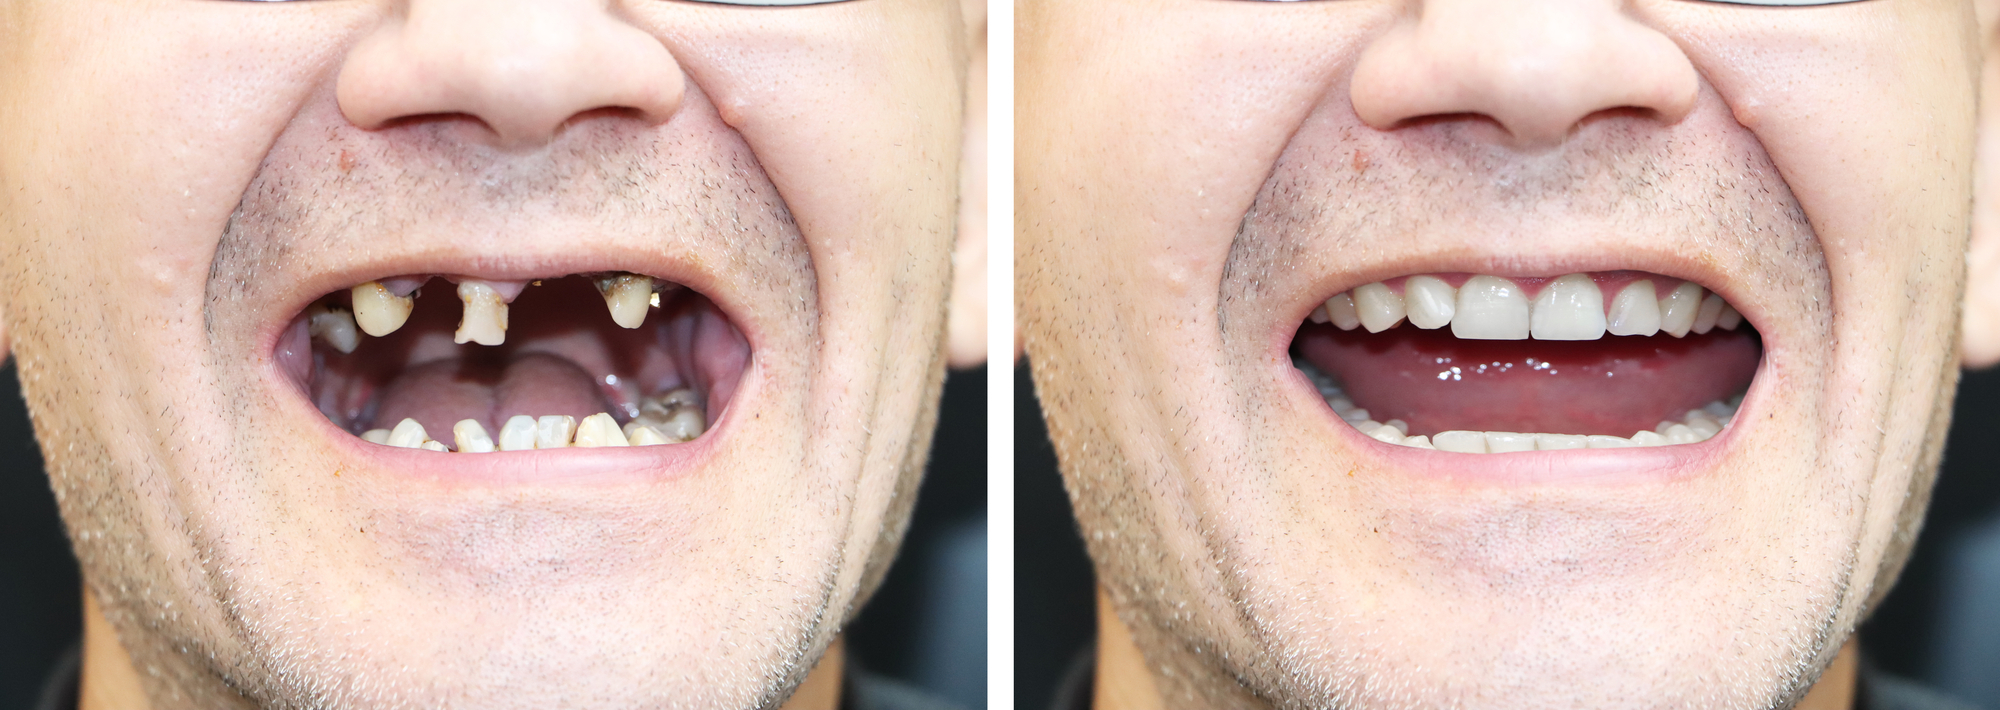 Dental Veneers Teeth Before and After: Real-Life Examples